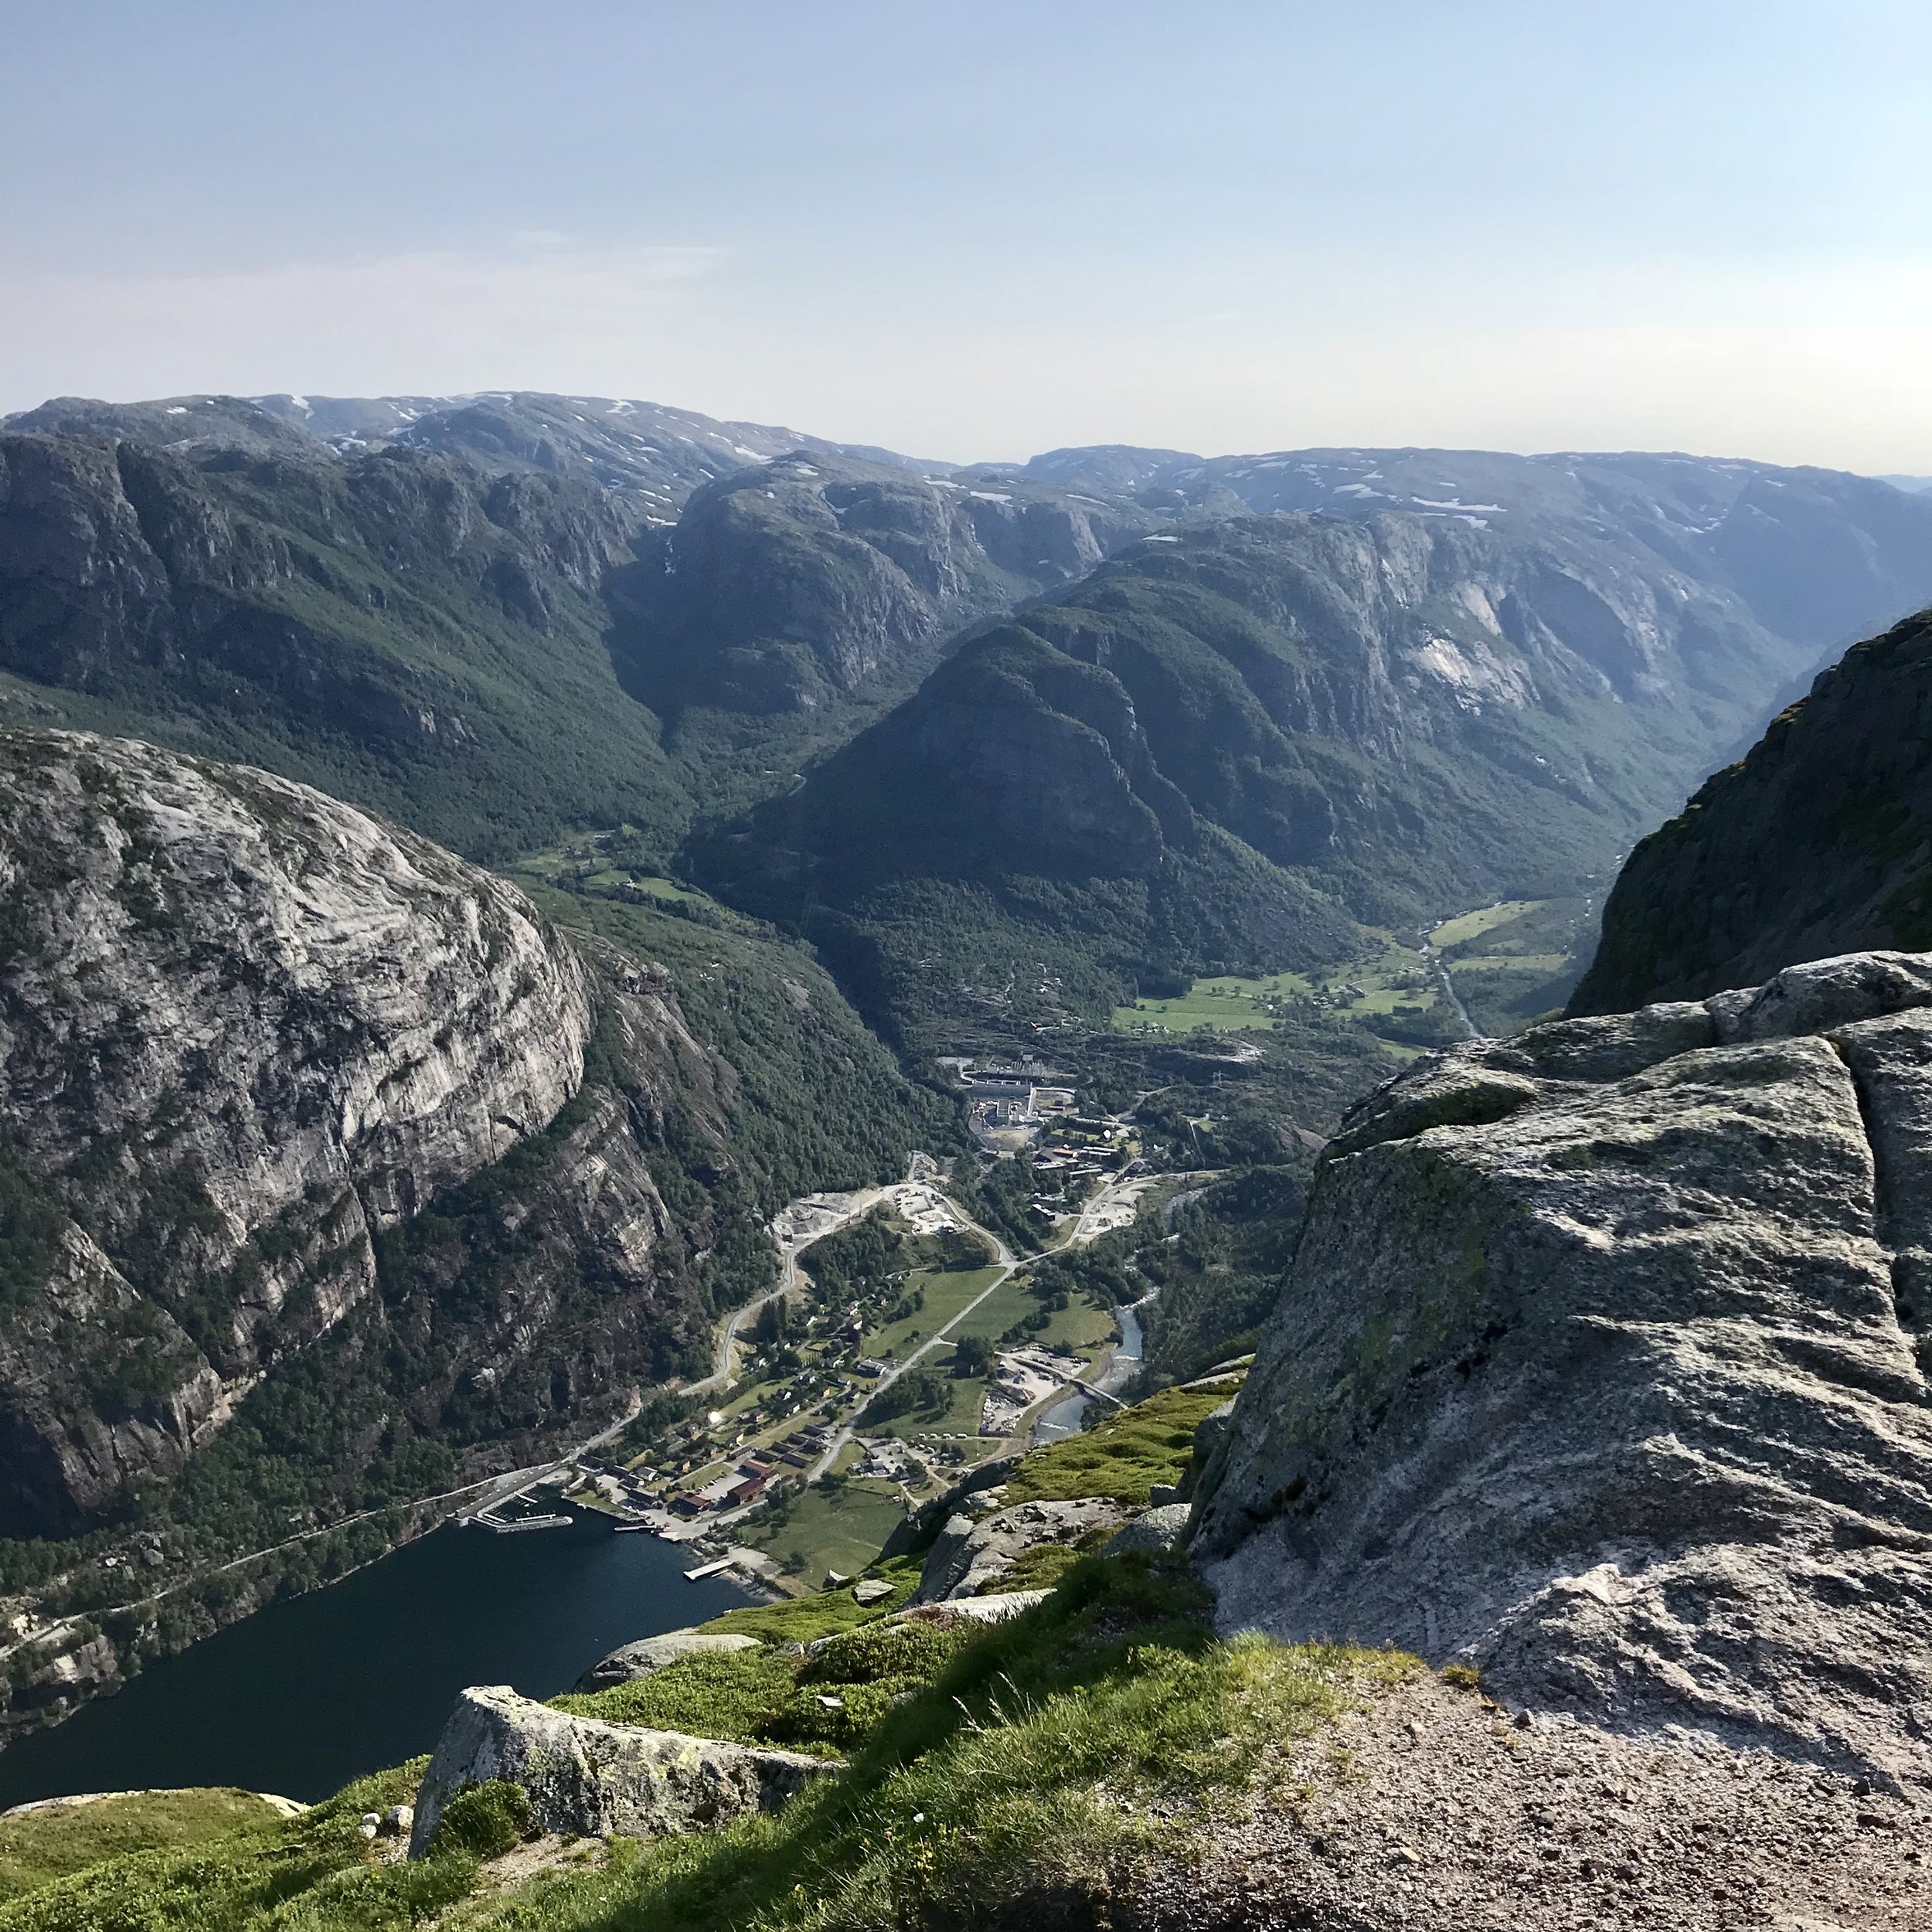  View of Lysebotn from the Kjerag hike. 